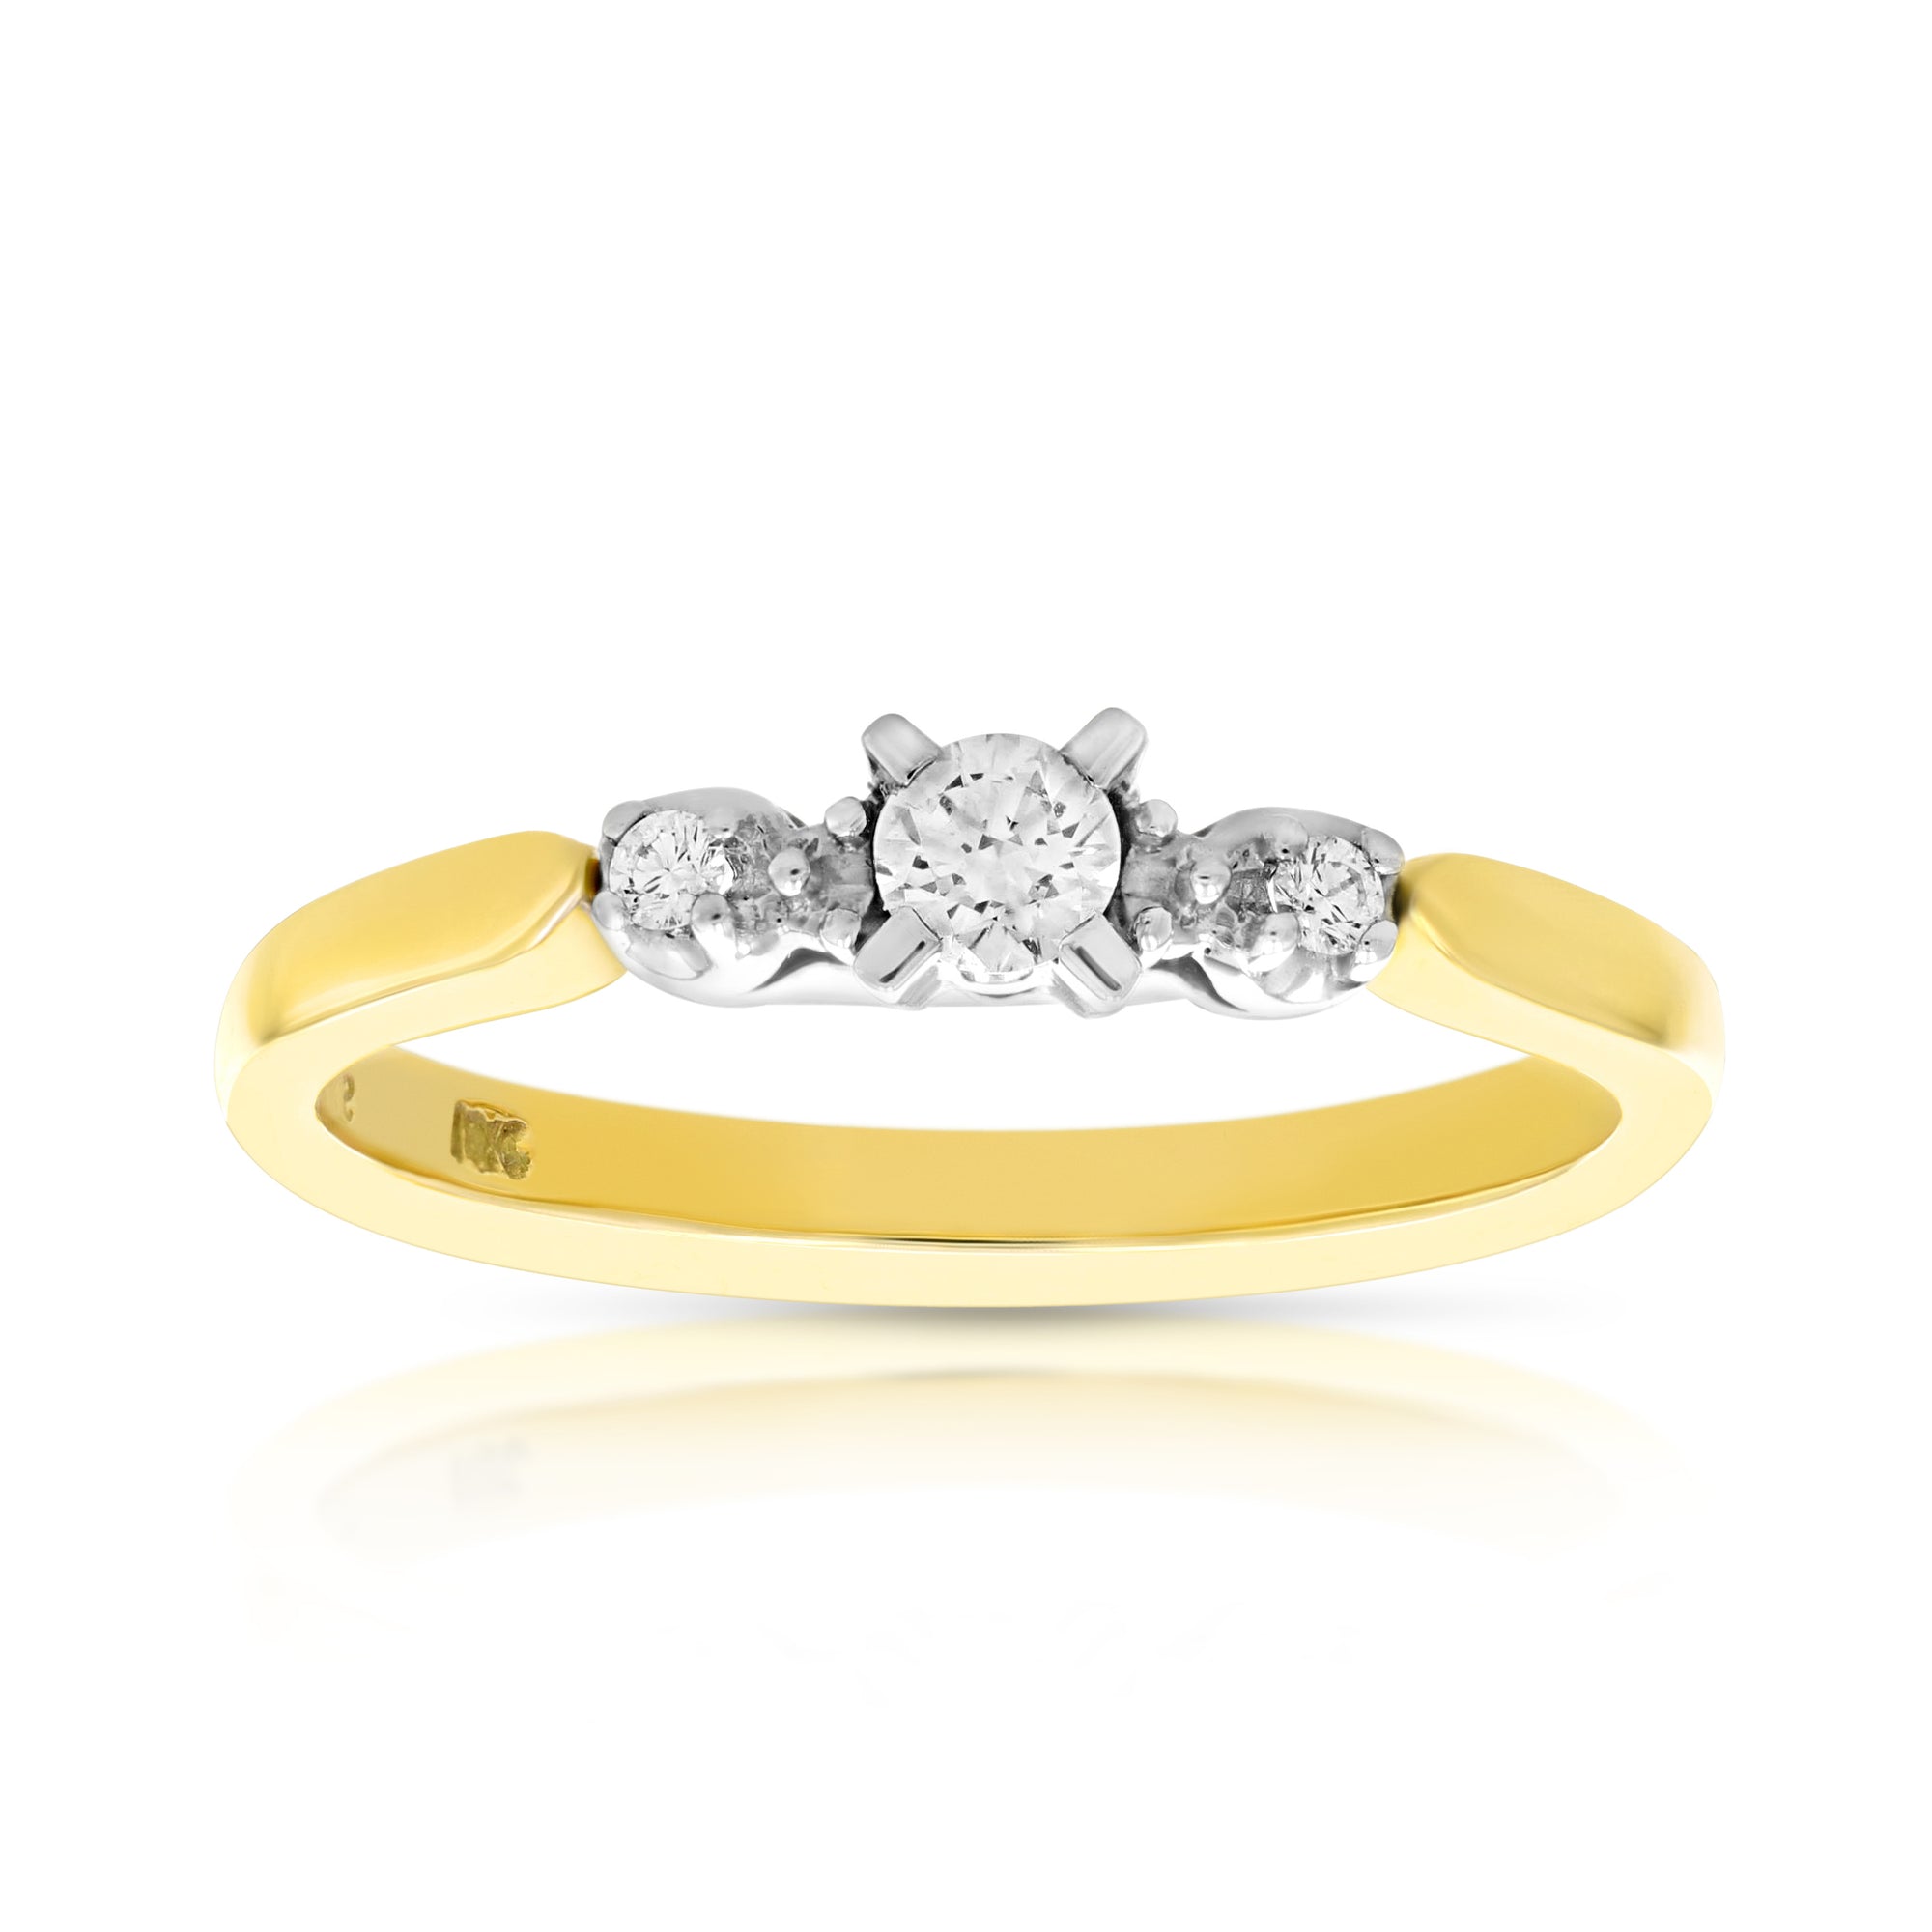 1/7 cttw Diamond 3 Stone Ring 18K Yellow Gold Engagement Bridal Size 7